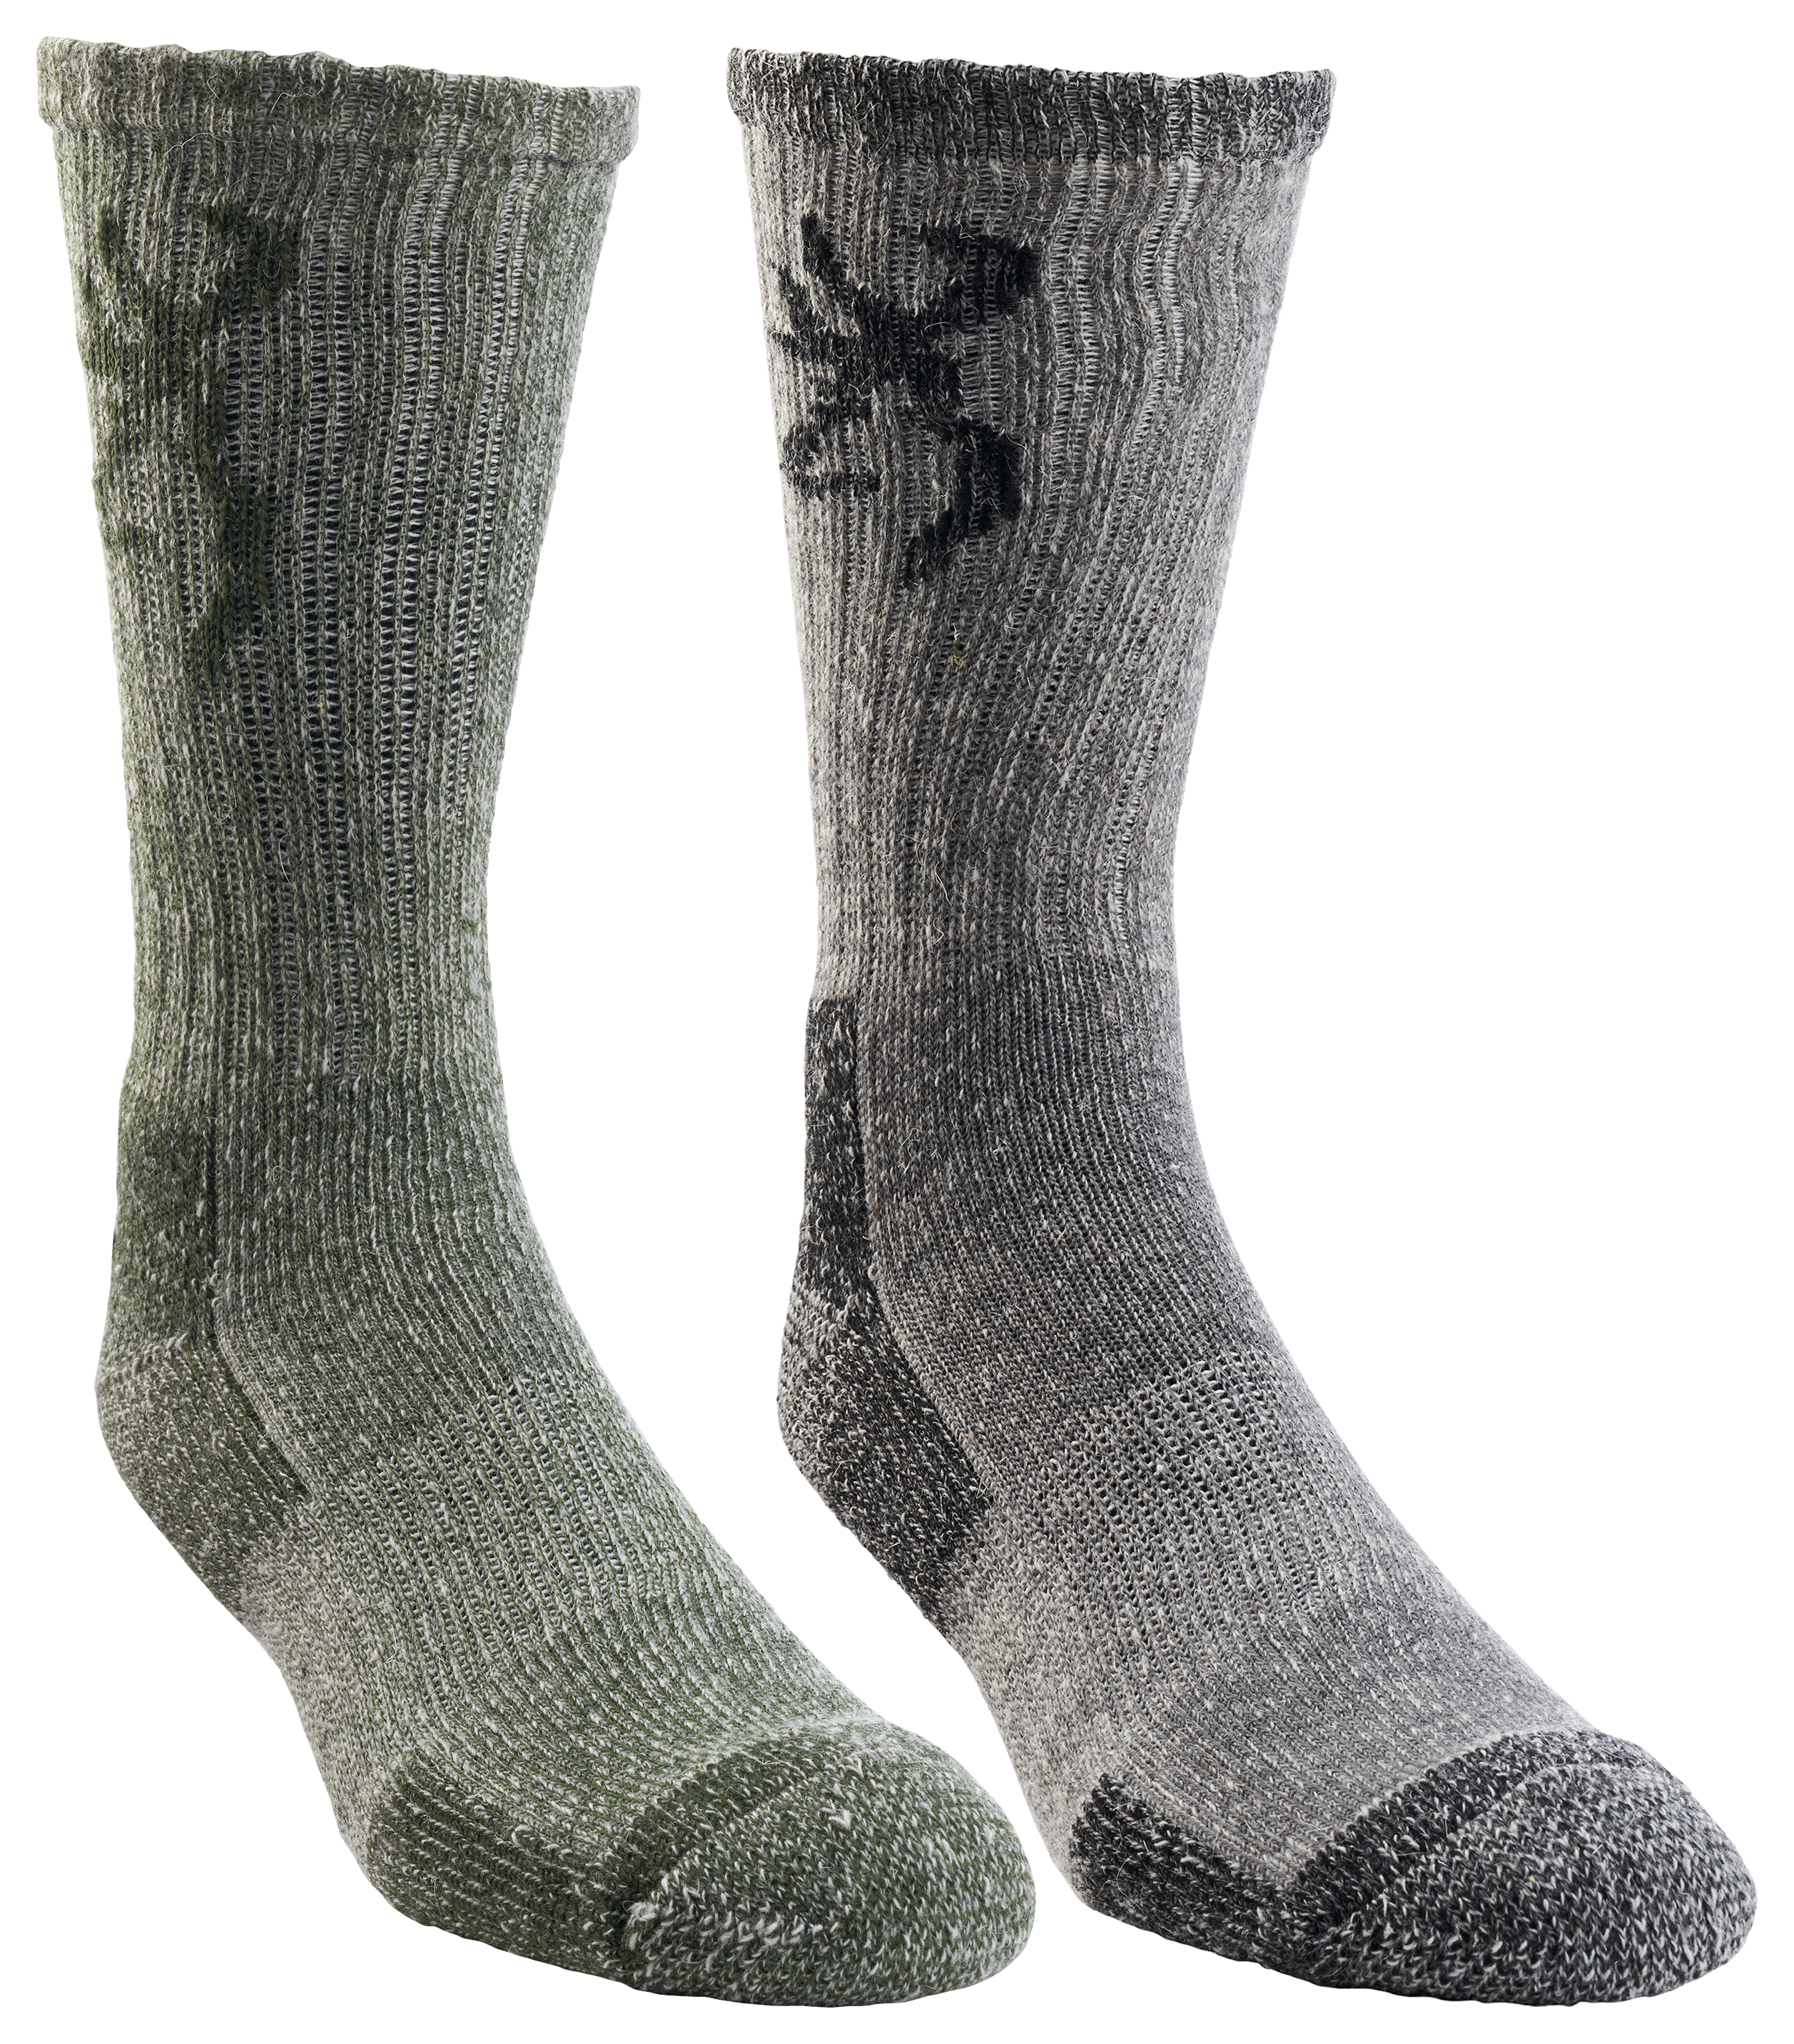 Browning Poplar Wool Boot Socks for Men - Olive/Black Assortment - L